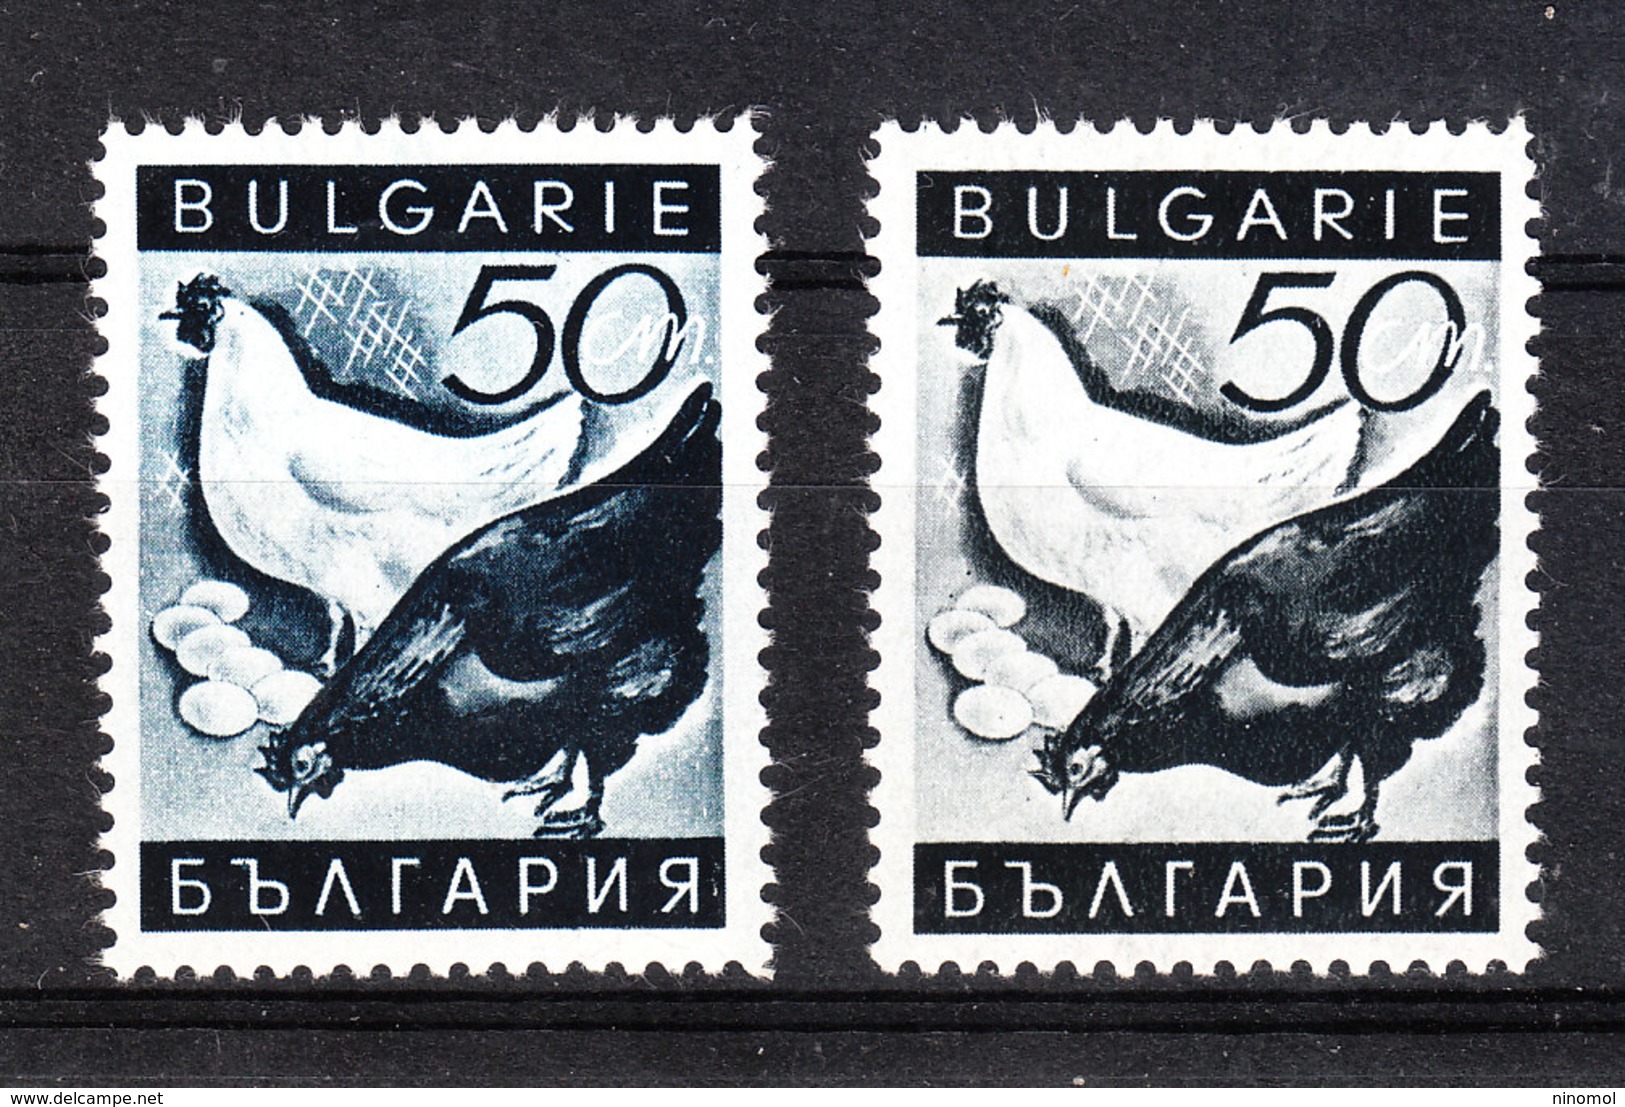 Bulgaria - 1938. Galline. I 2 Soli Francobolli Della Serie" Animali ". Hens. Only 2 Stamps Of The Series "Animals".MNH - Galline & Gallinaceo